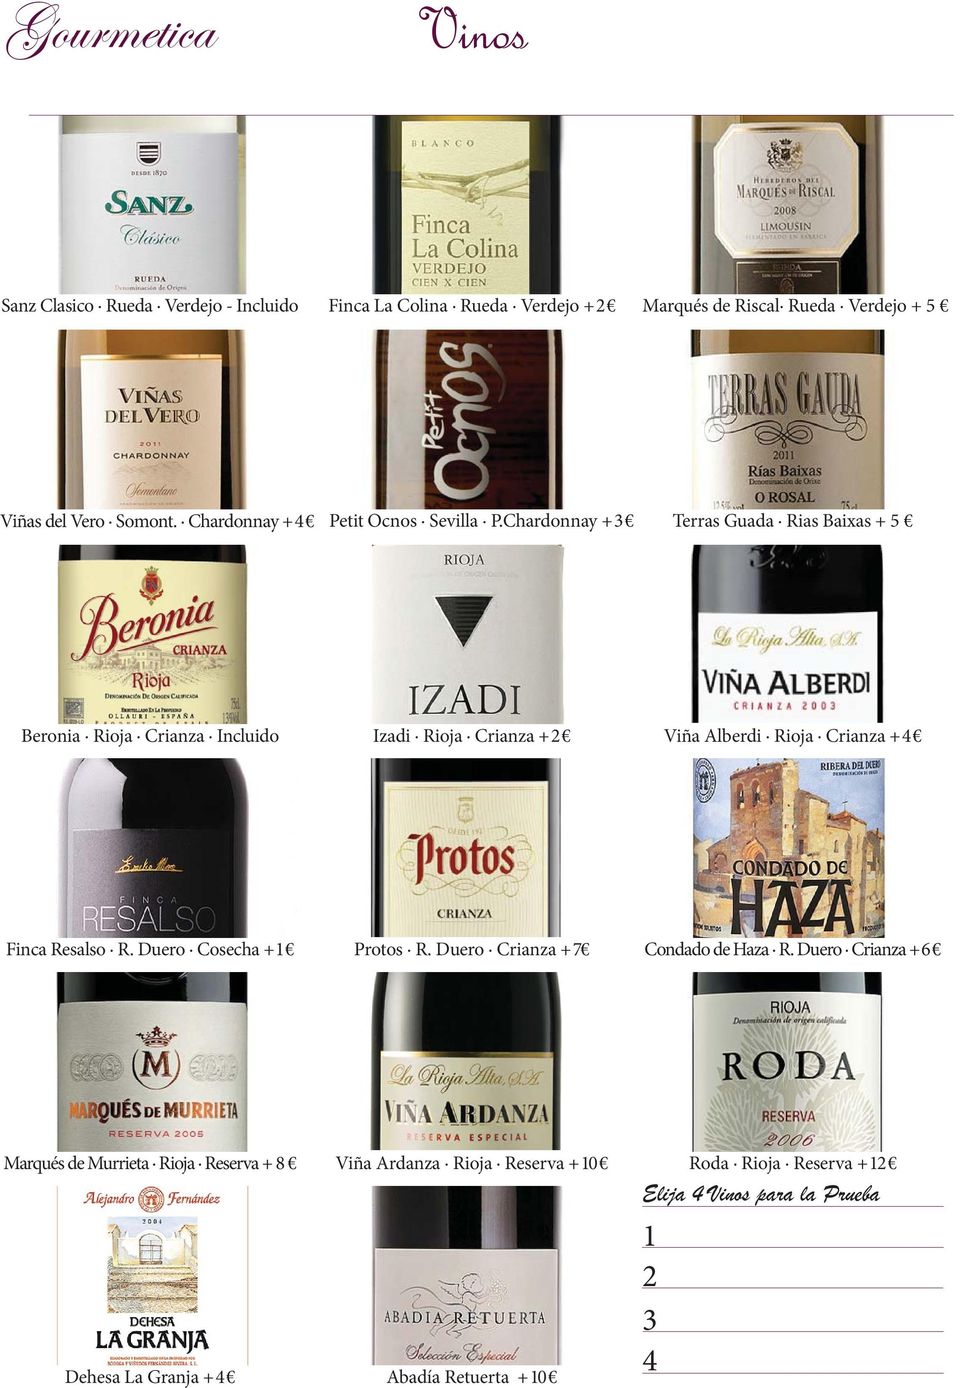 Chardonnay + Terras Guada Rias Baixas + 5 Beronia Rioja Crianza Incluido Izadi Rioja Crianza + Viña Alberdi Rioja Crianza + 4 Finca Resalso R.